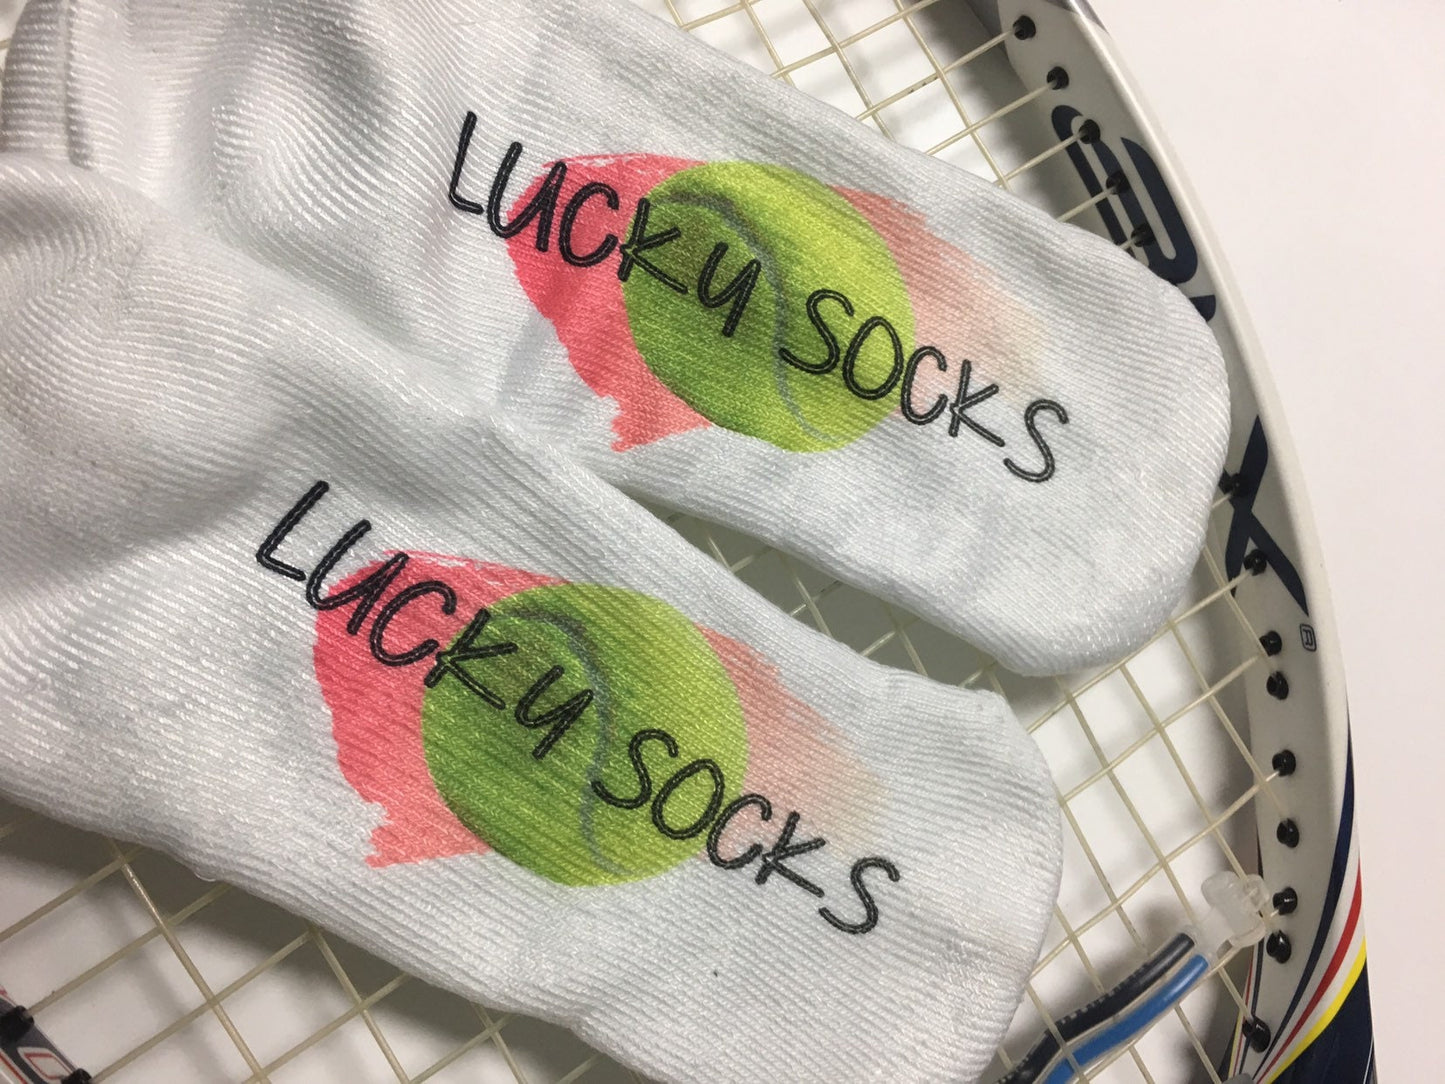 Tennis lucky socks